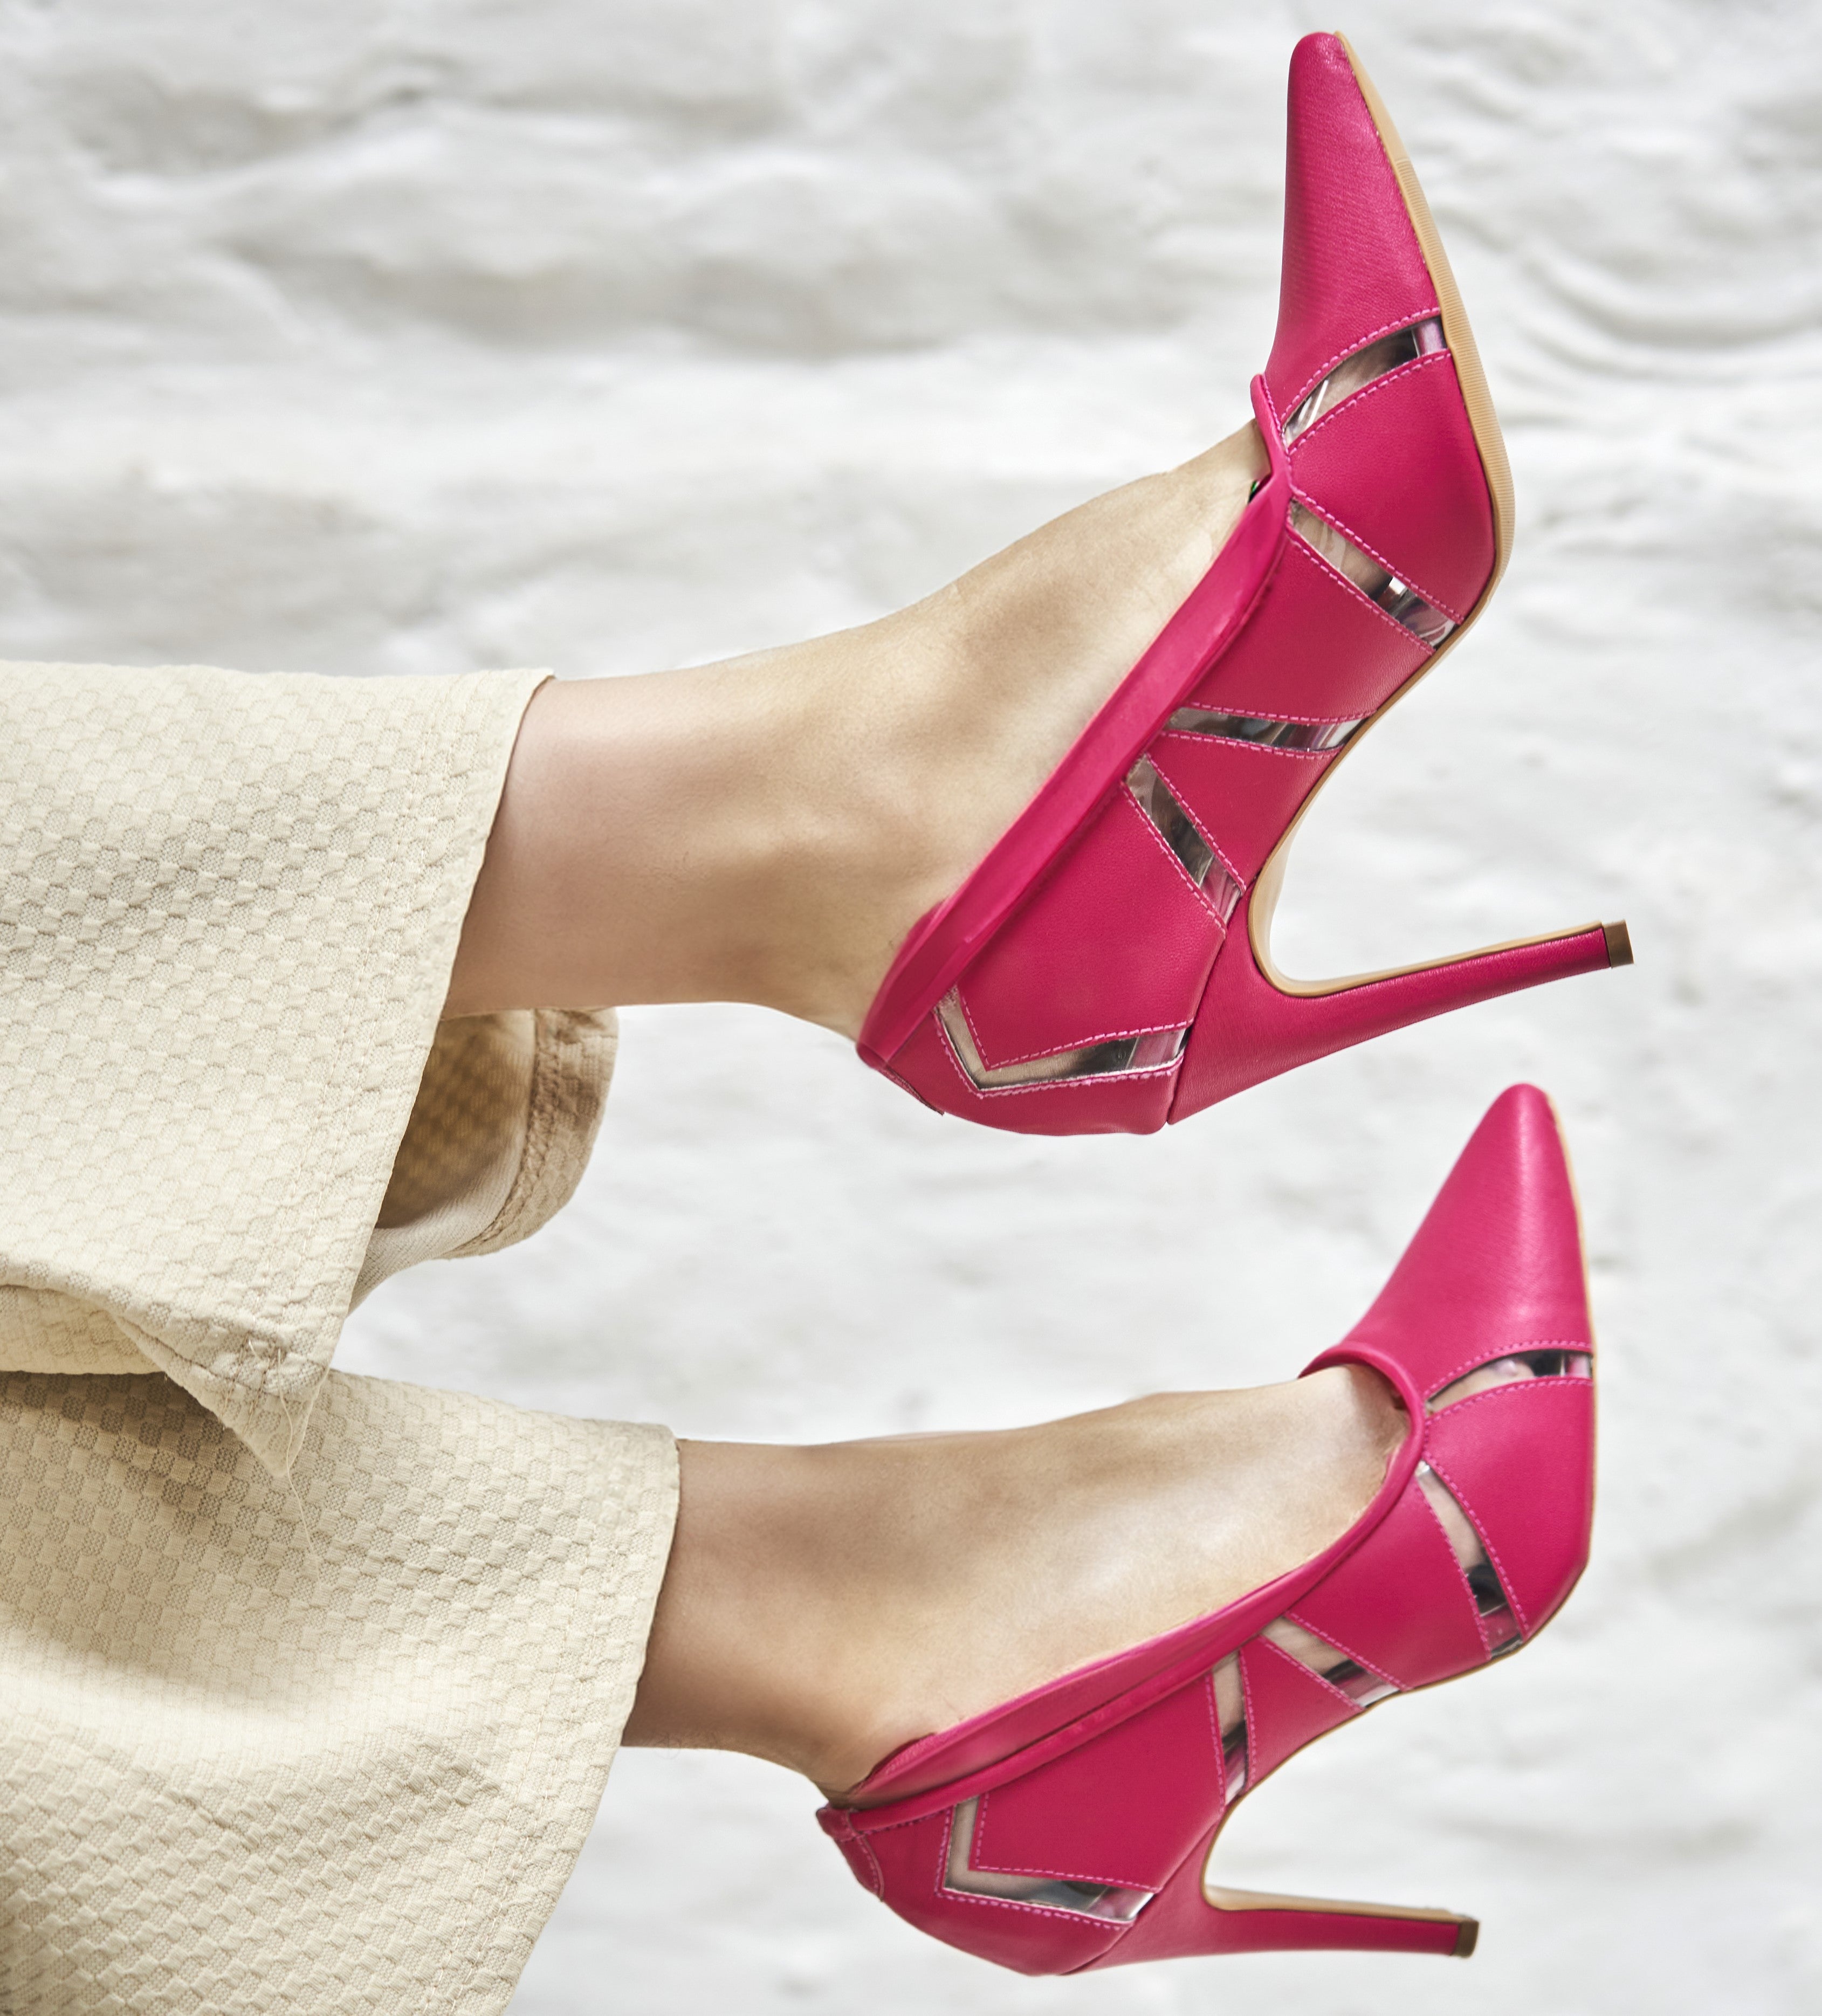 Maken Pointed Toe Classic Stiletto Heels Patent Pumps - Pink in Sexy Heels  & Platforms - $80.59